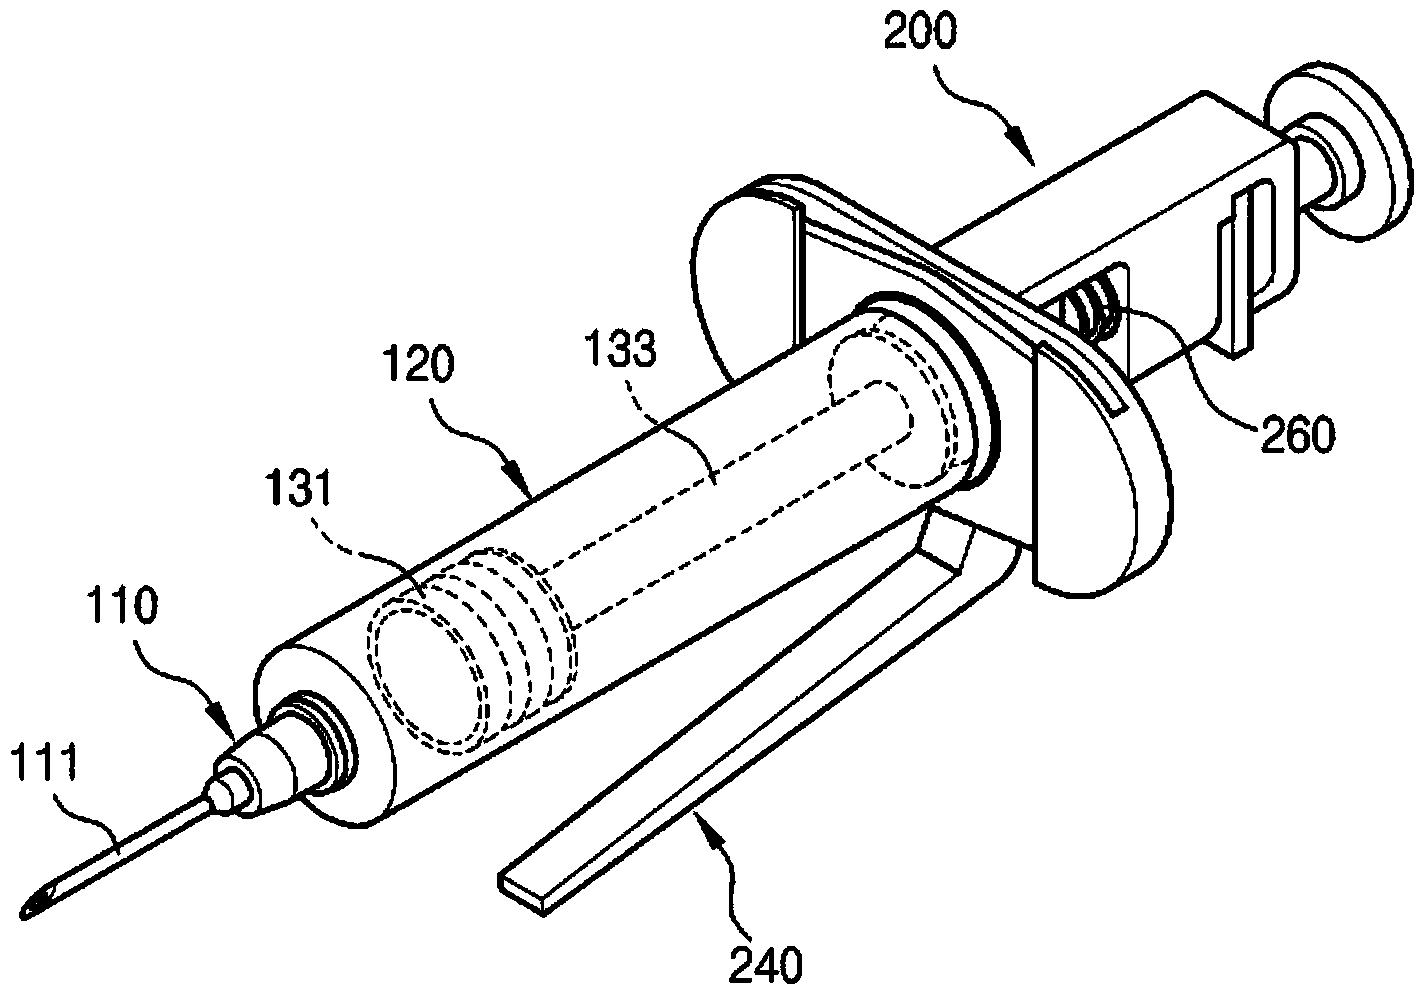 Syringe pressure generating and pressure displaying device